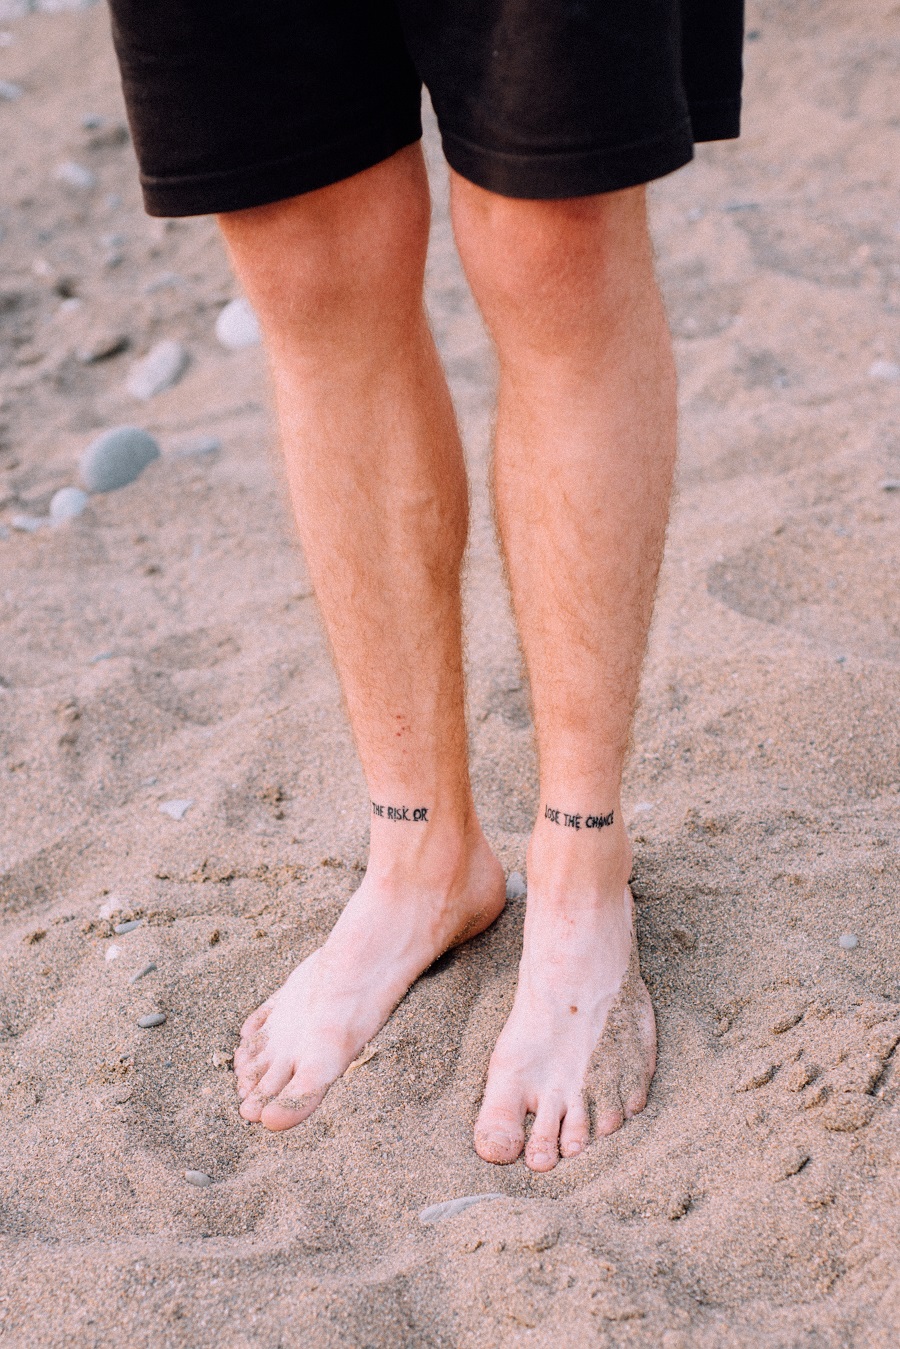 Надписи - на ноге | Tattoo Magnum